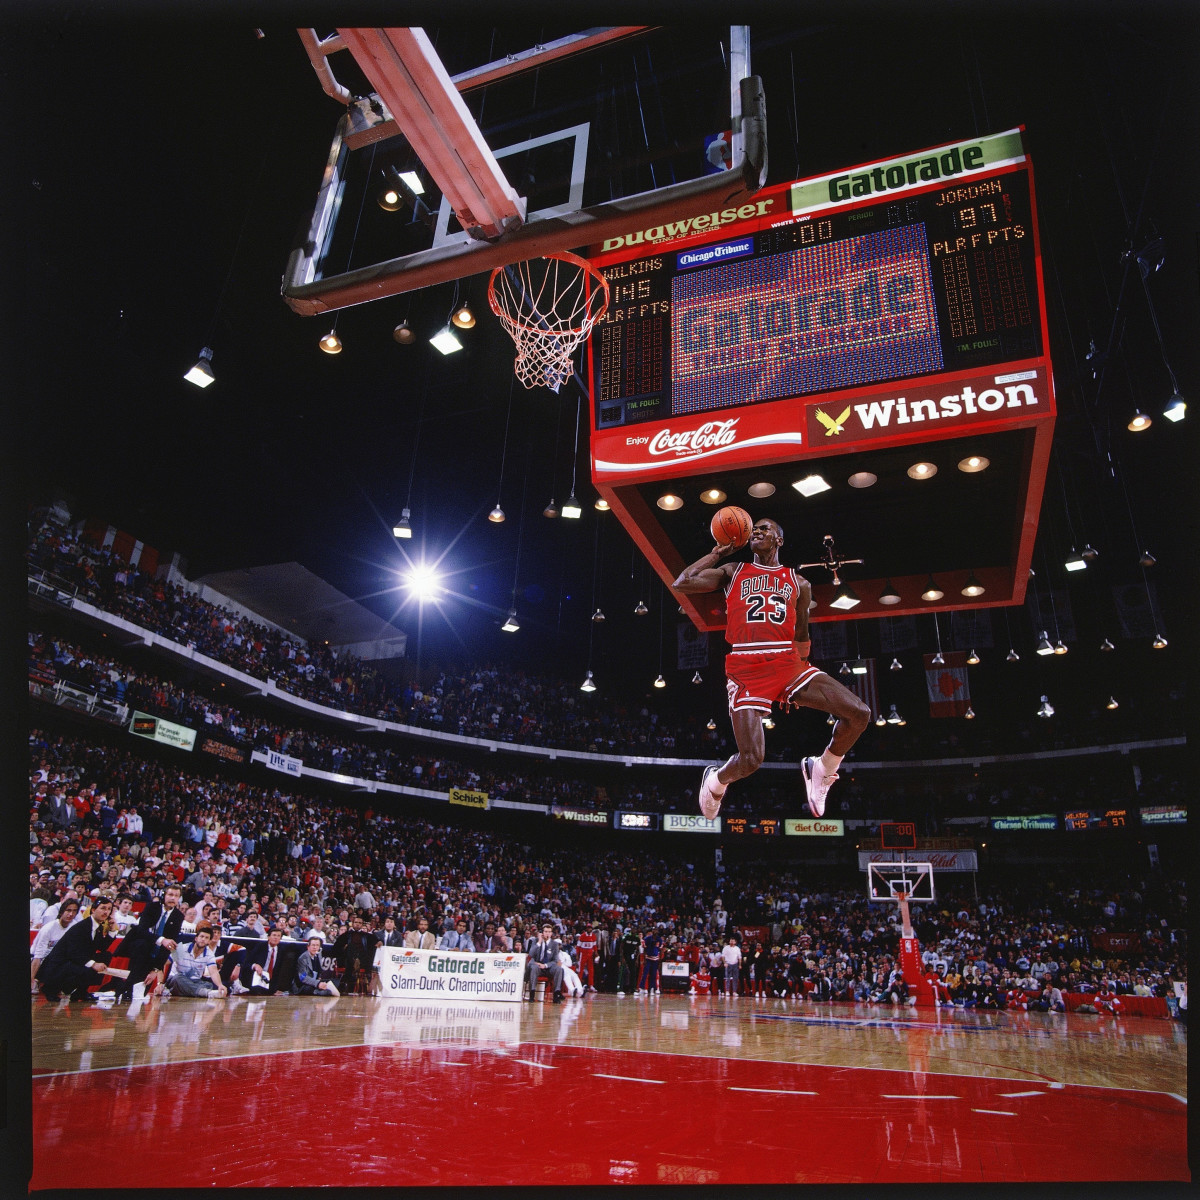 Michael Jordan dunk contest photo 